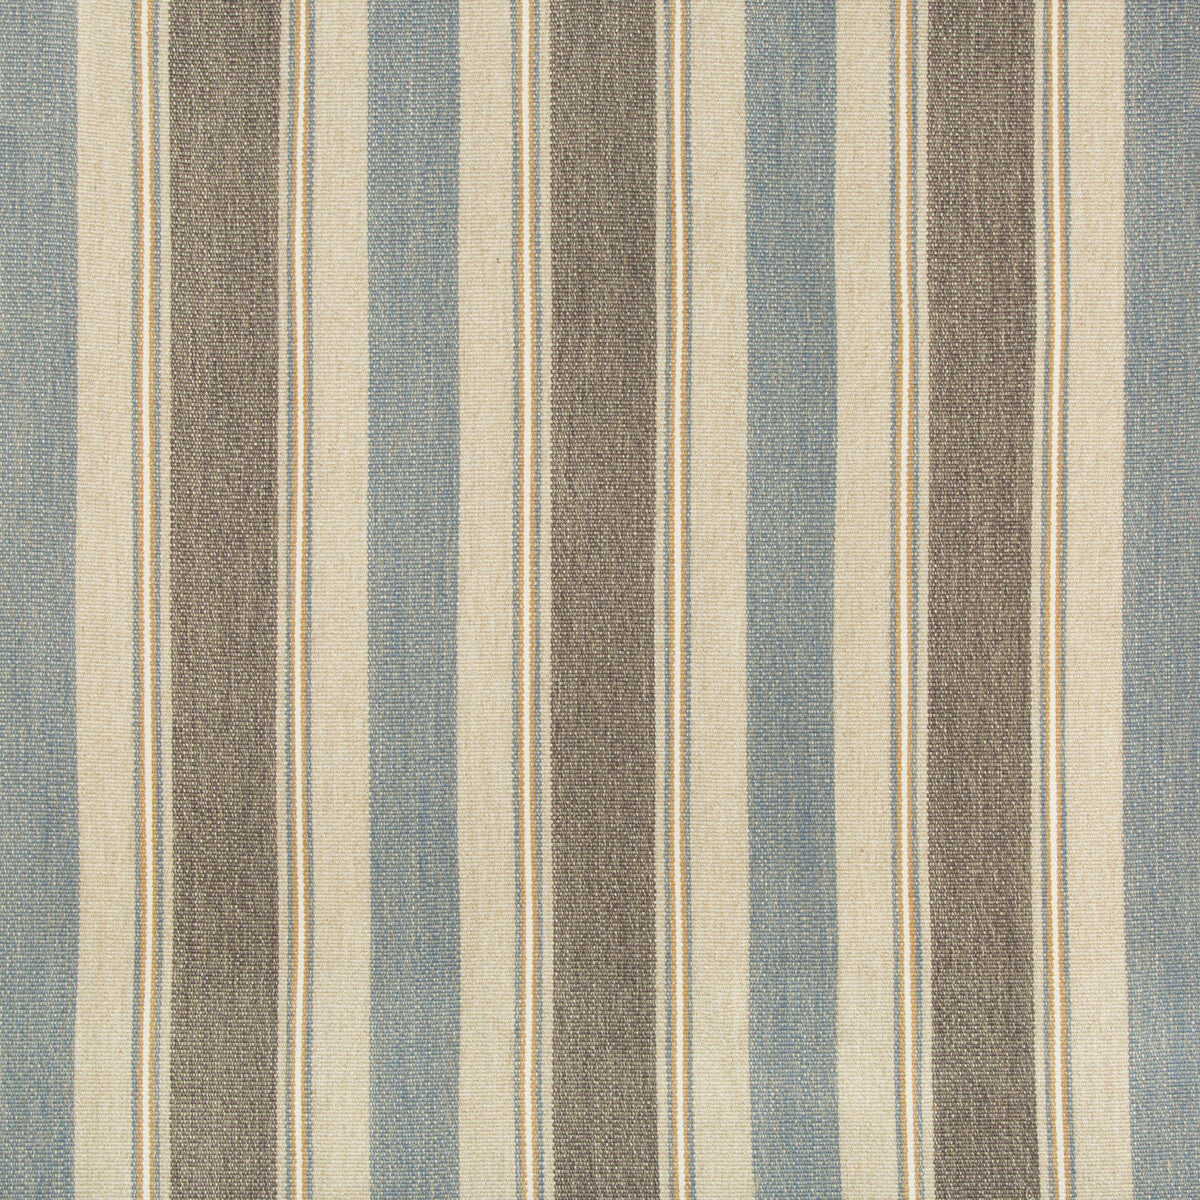 Helmsley fabric in baybreeze color - pattern 35155.521.0 - by Kravet Design